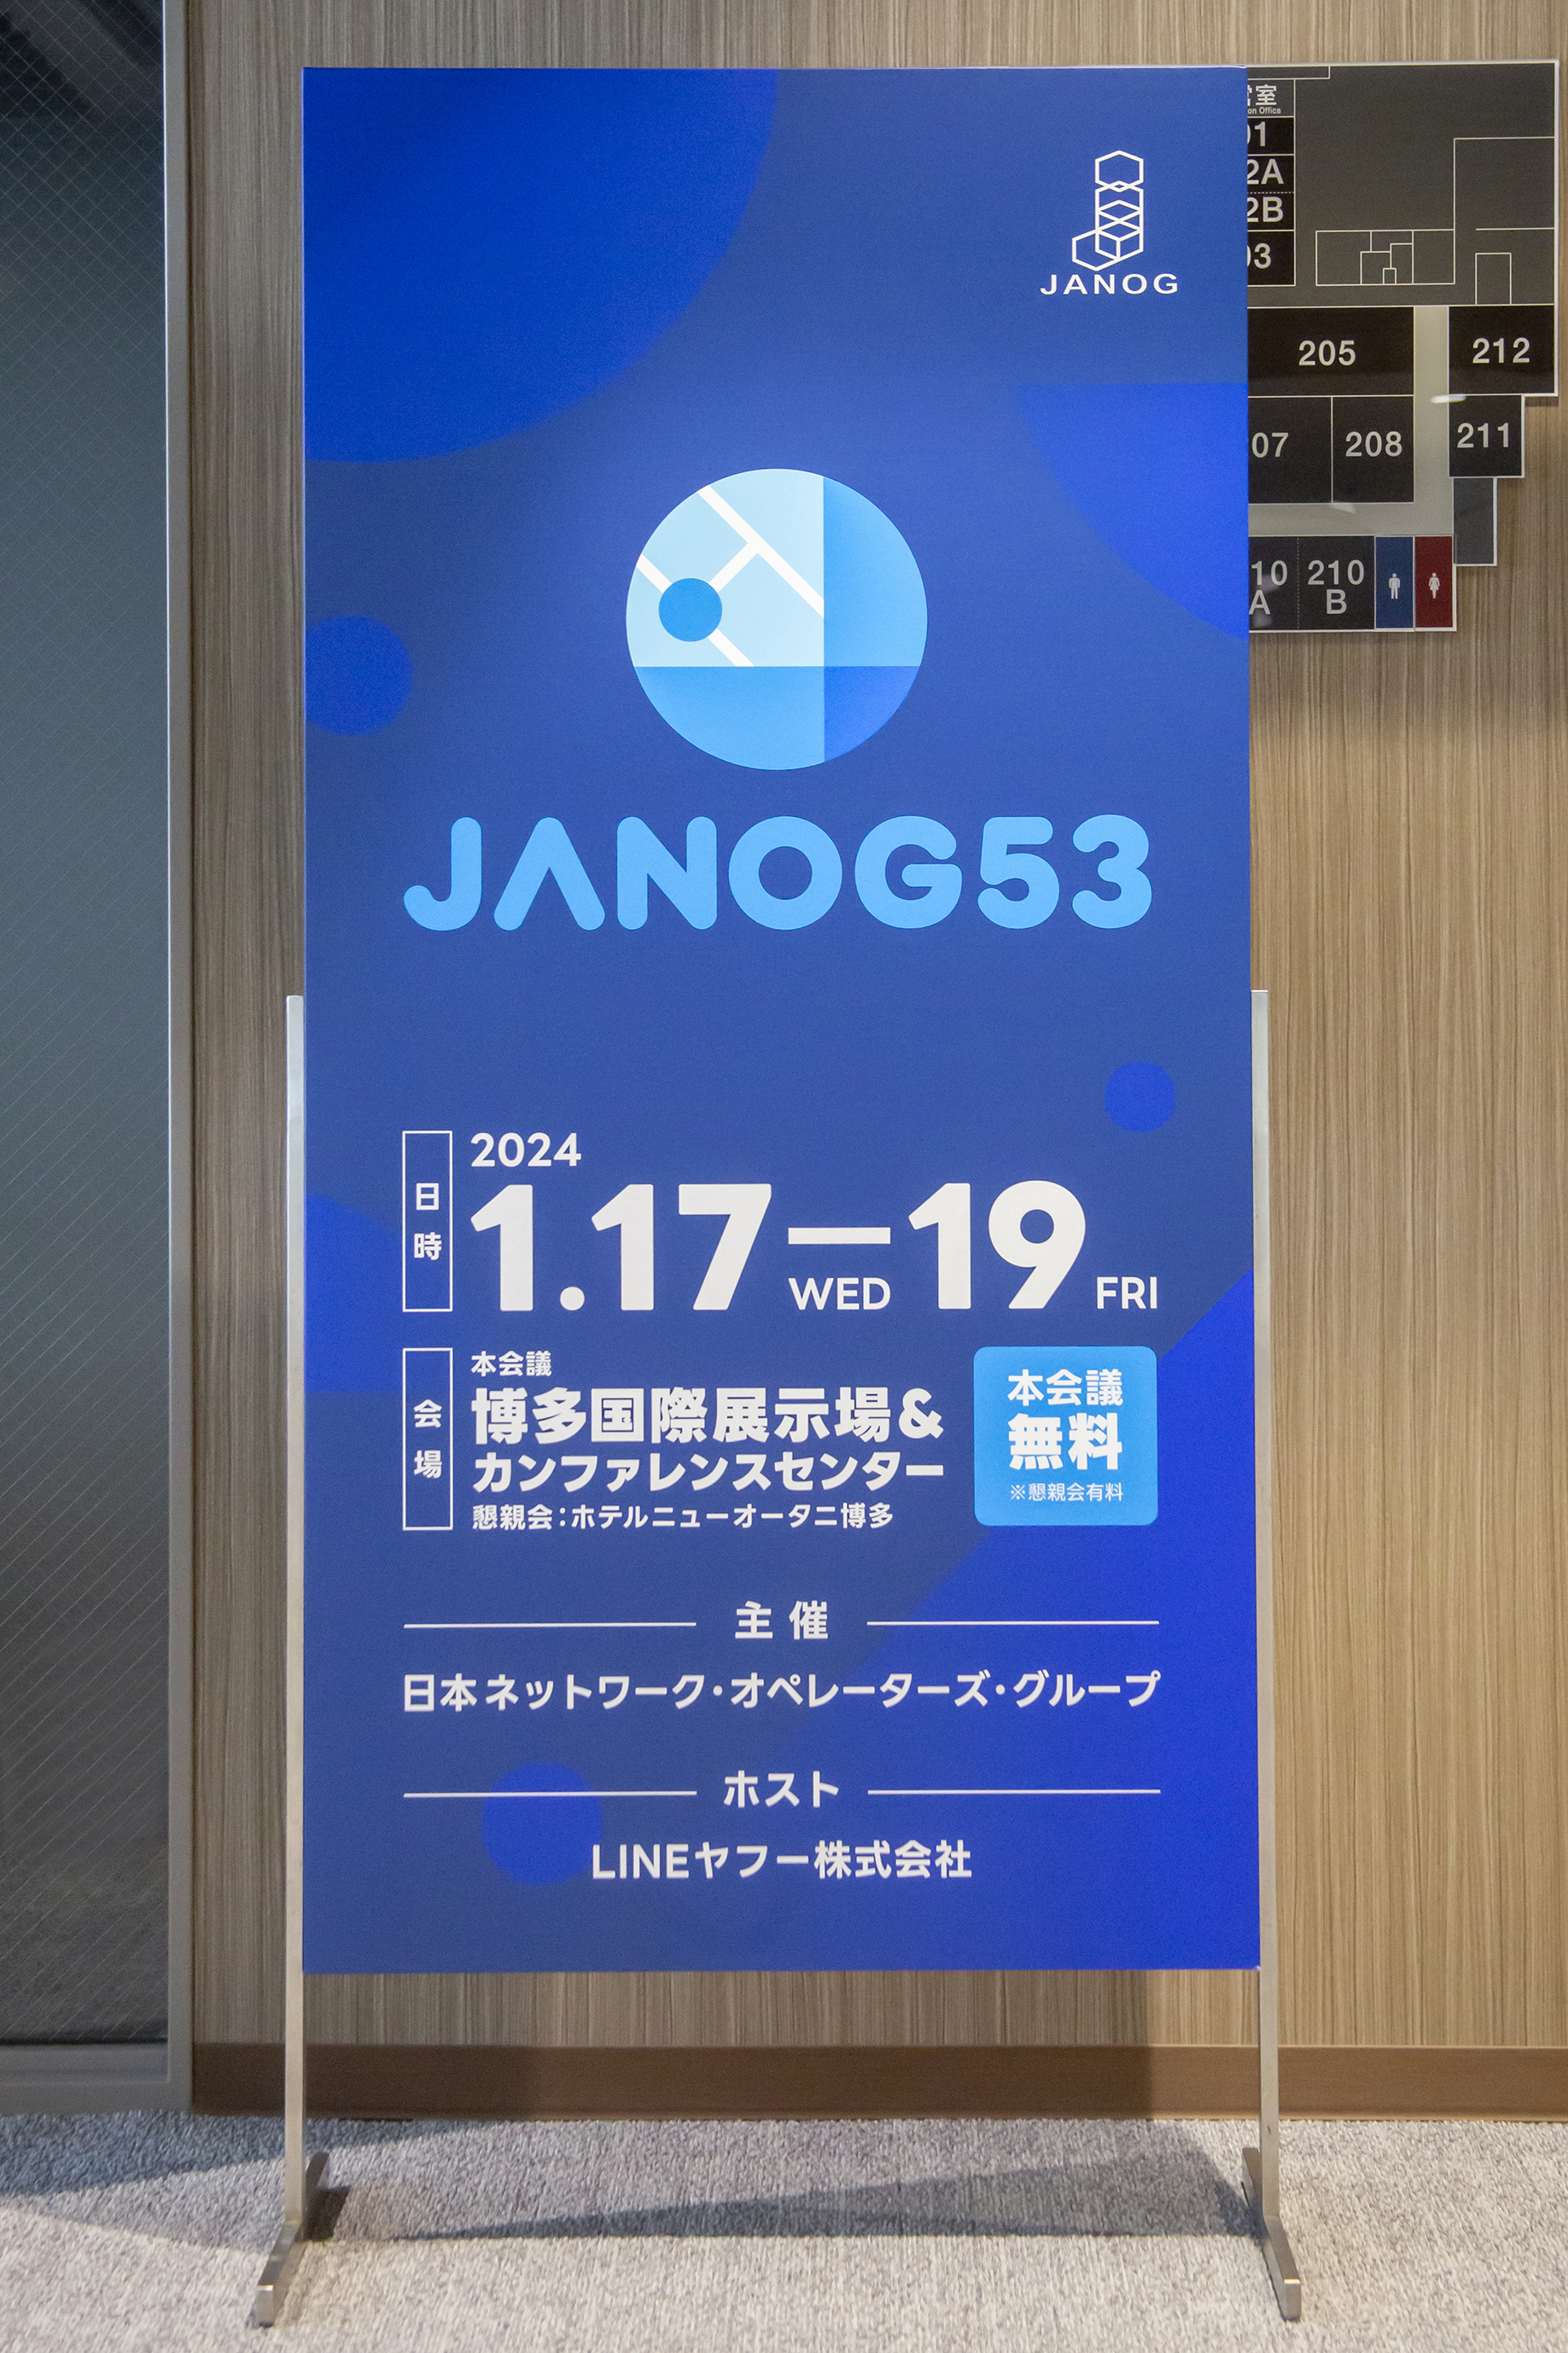 JANOG53 開催概要看板